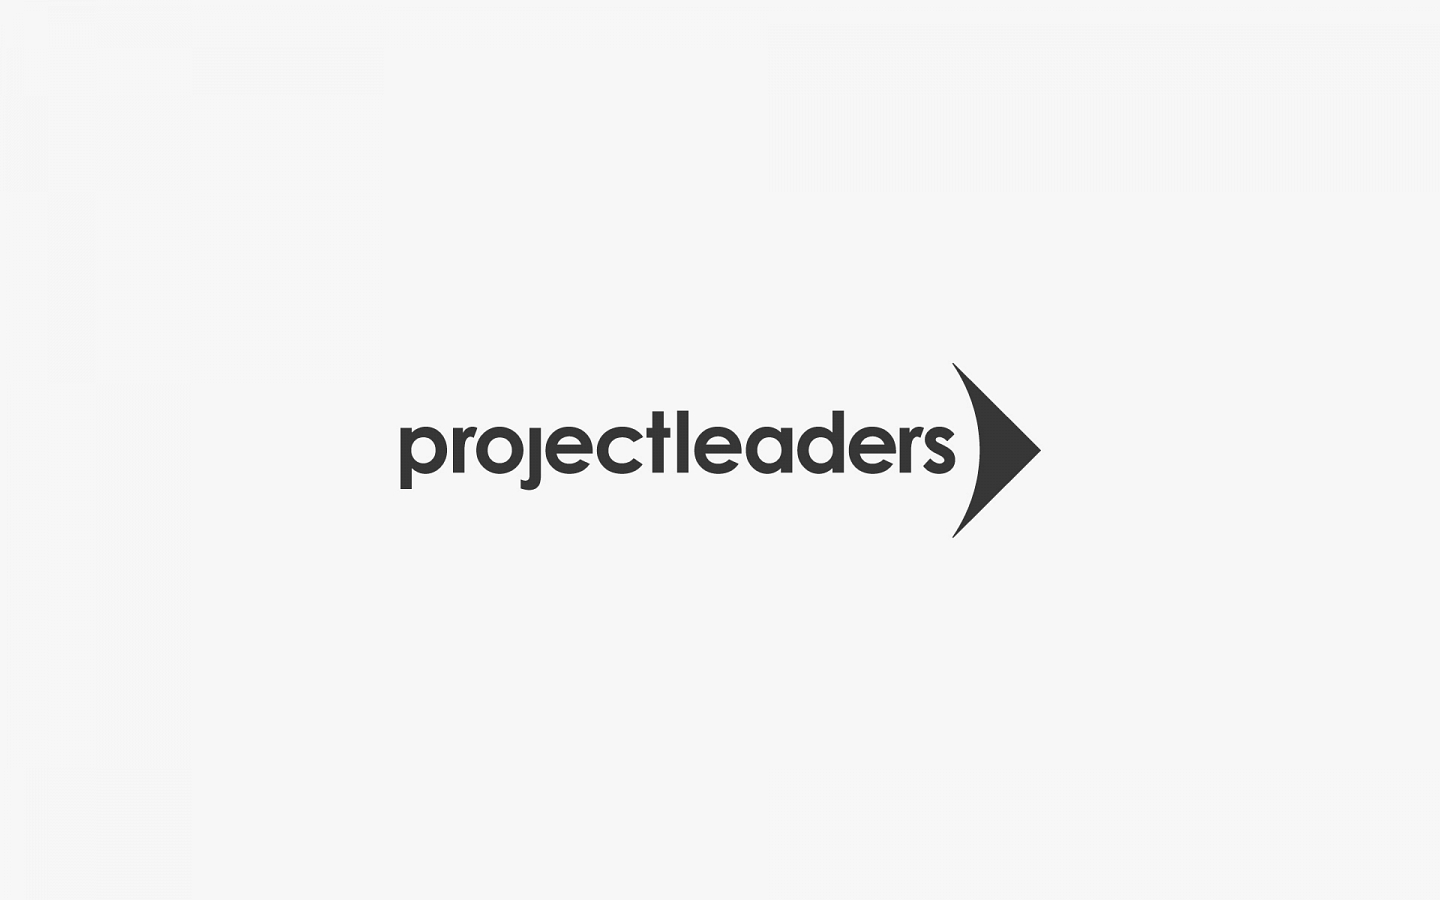 projectleaderslogo1